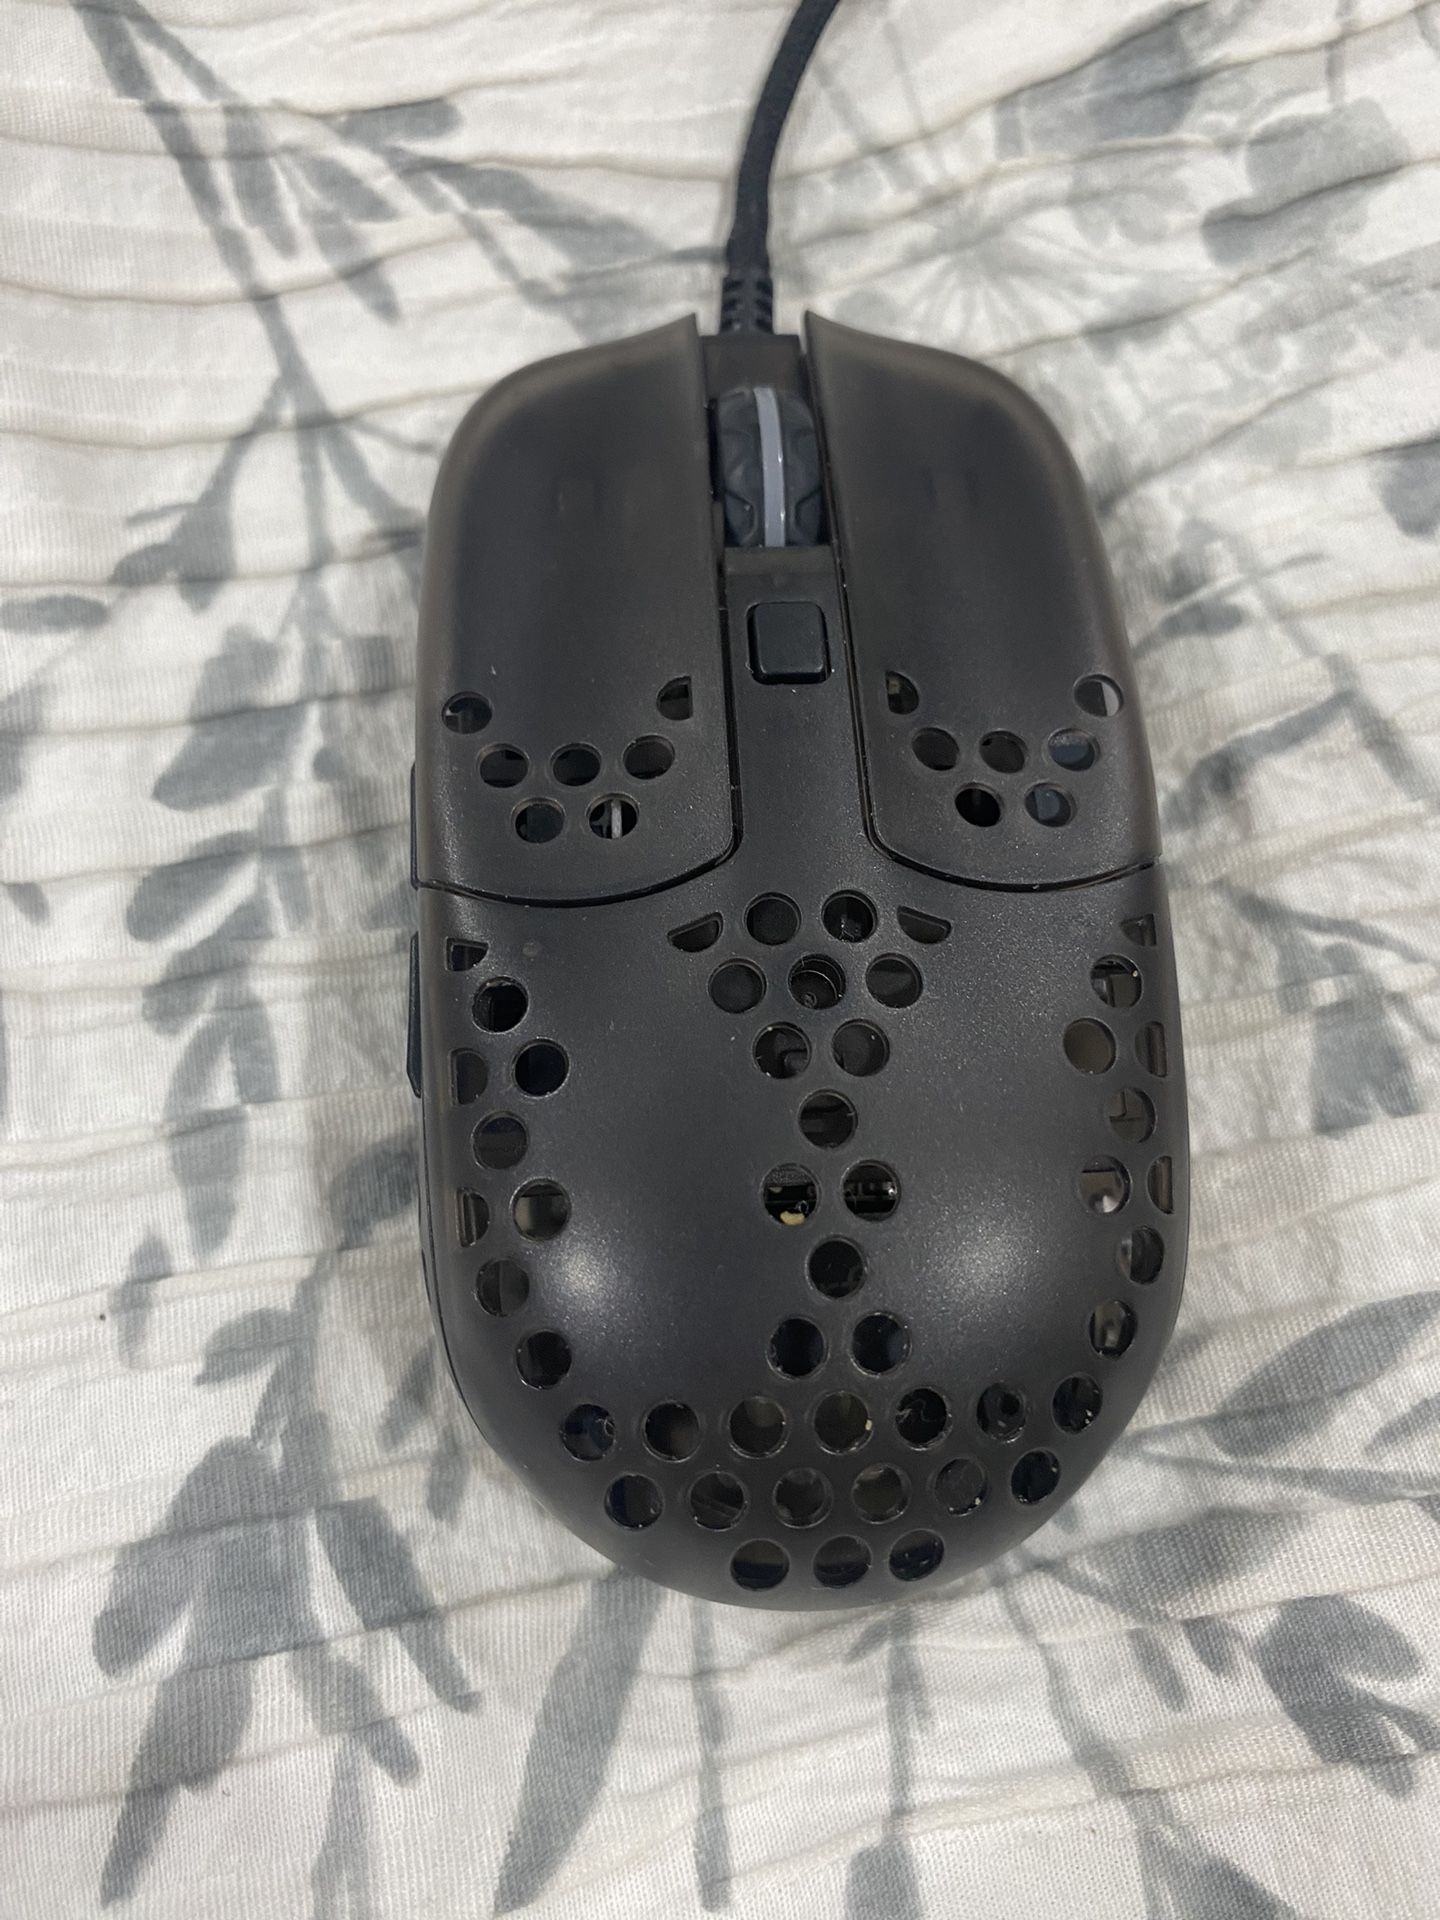 Xtrfy MZ1 Zy’s Rail Gaming Mouse 